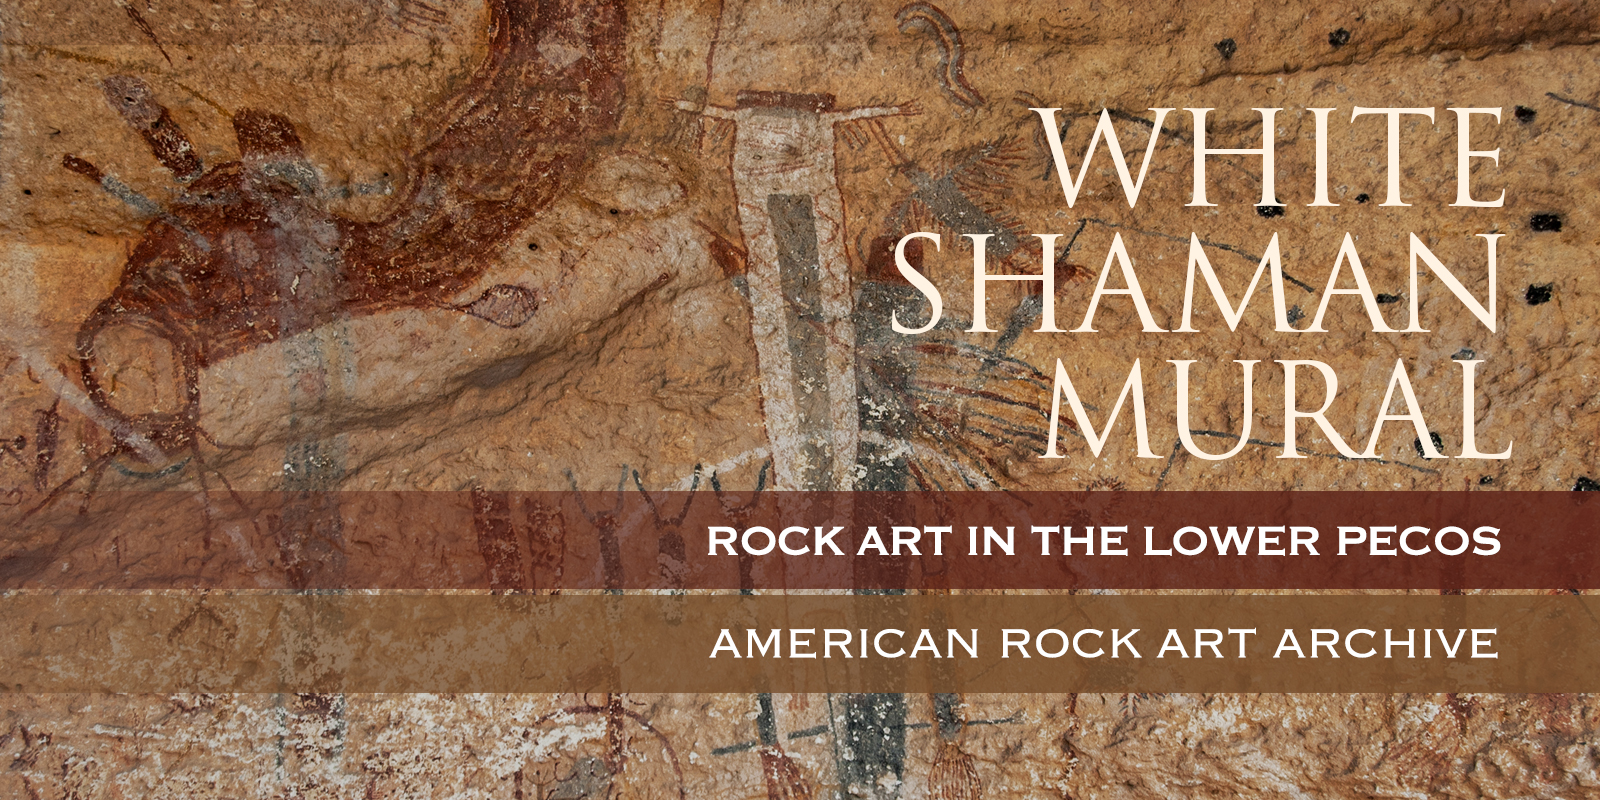 White Shaman Panel Lower Pecos Canyonlands Rock Art America Texas United States Petroglyphs Pictographs Archaeology Prehistory Rockart